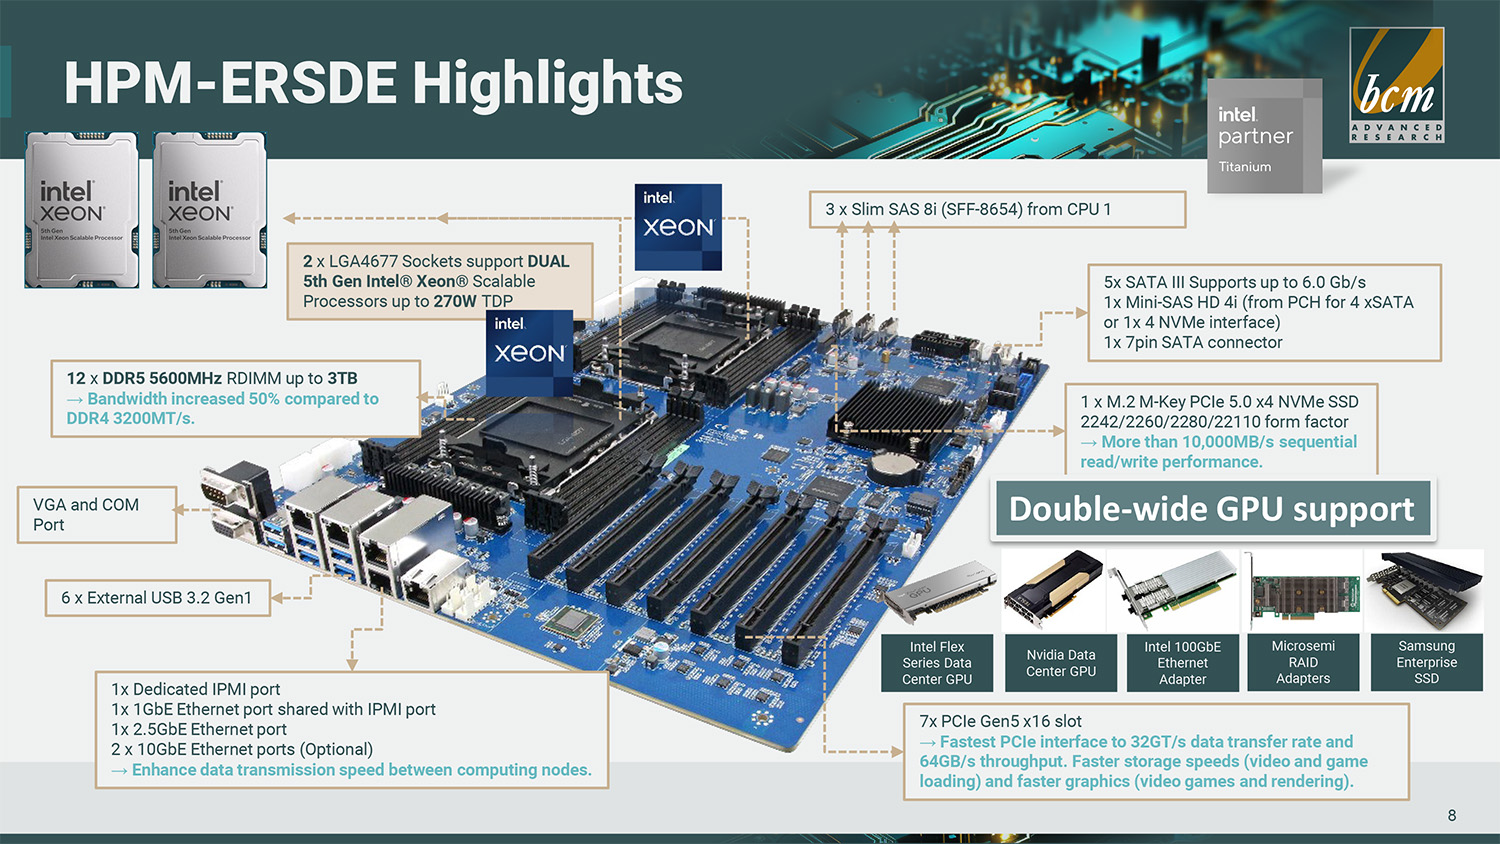 HPM-ERSDE dual sockets support 5th Gen Intel Xeon Processors